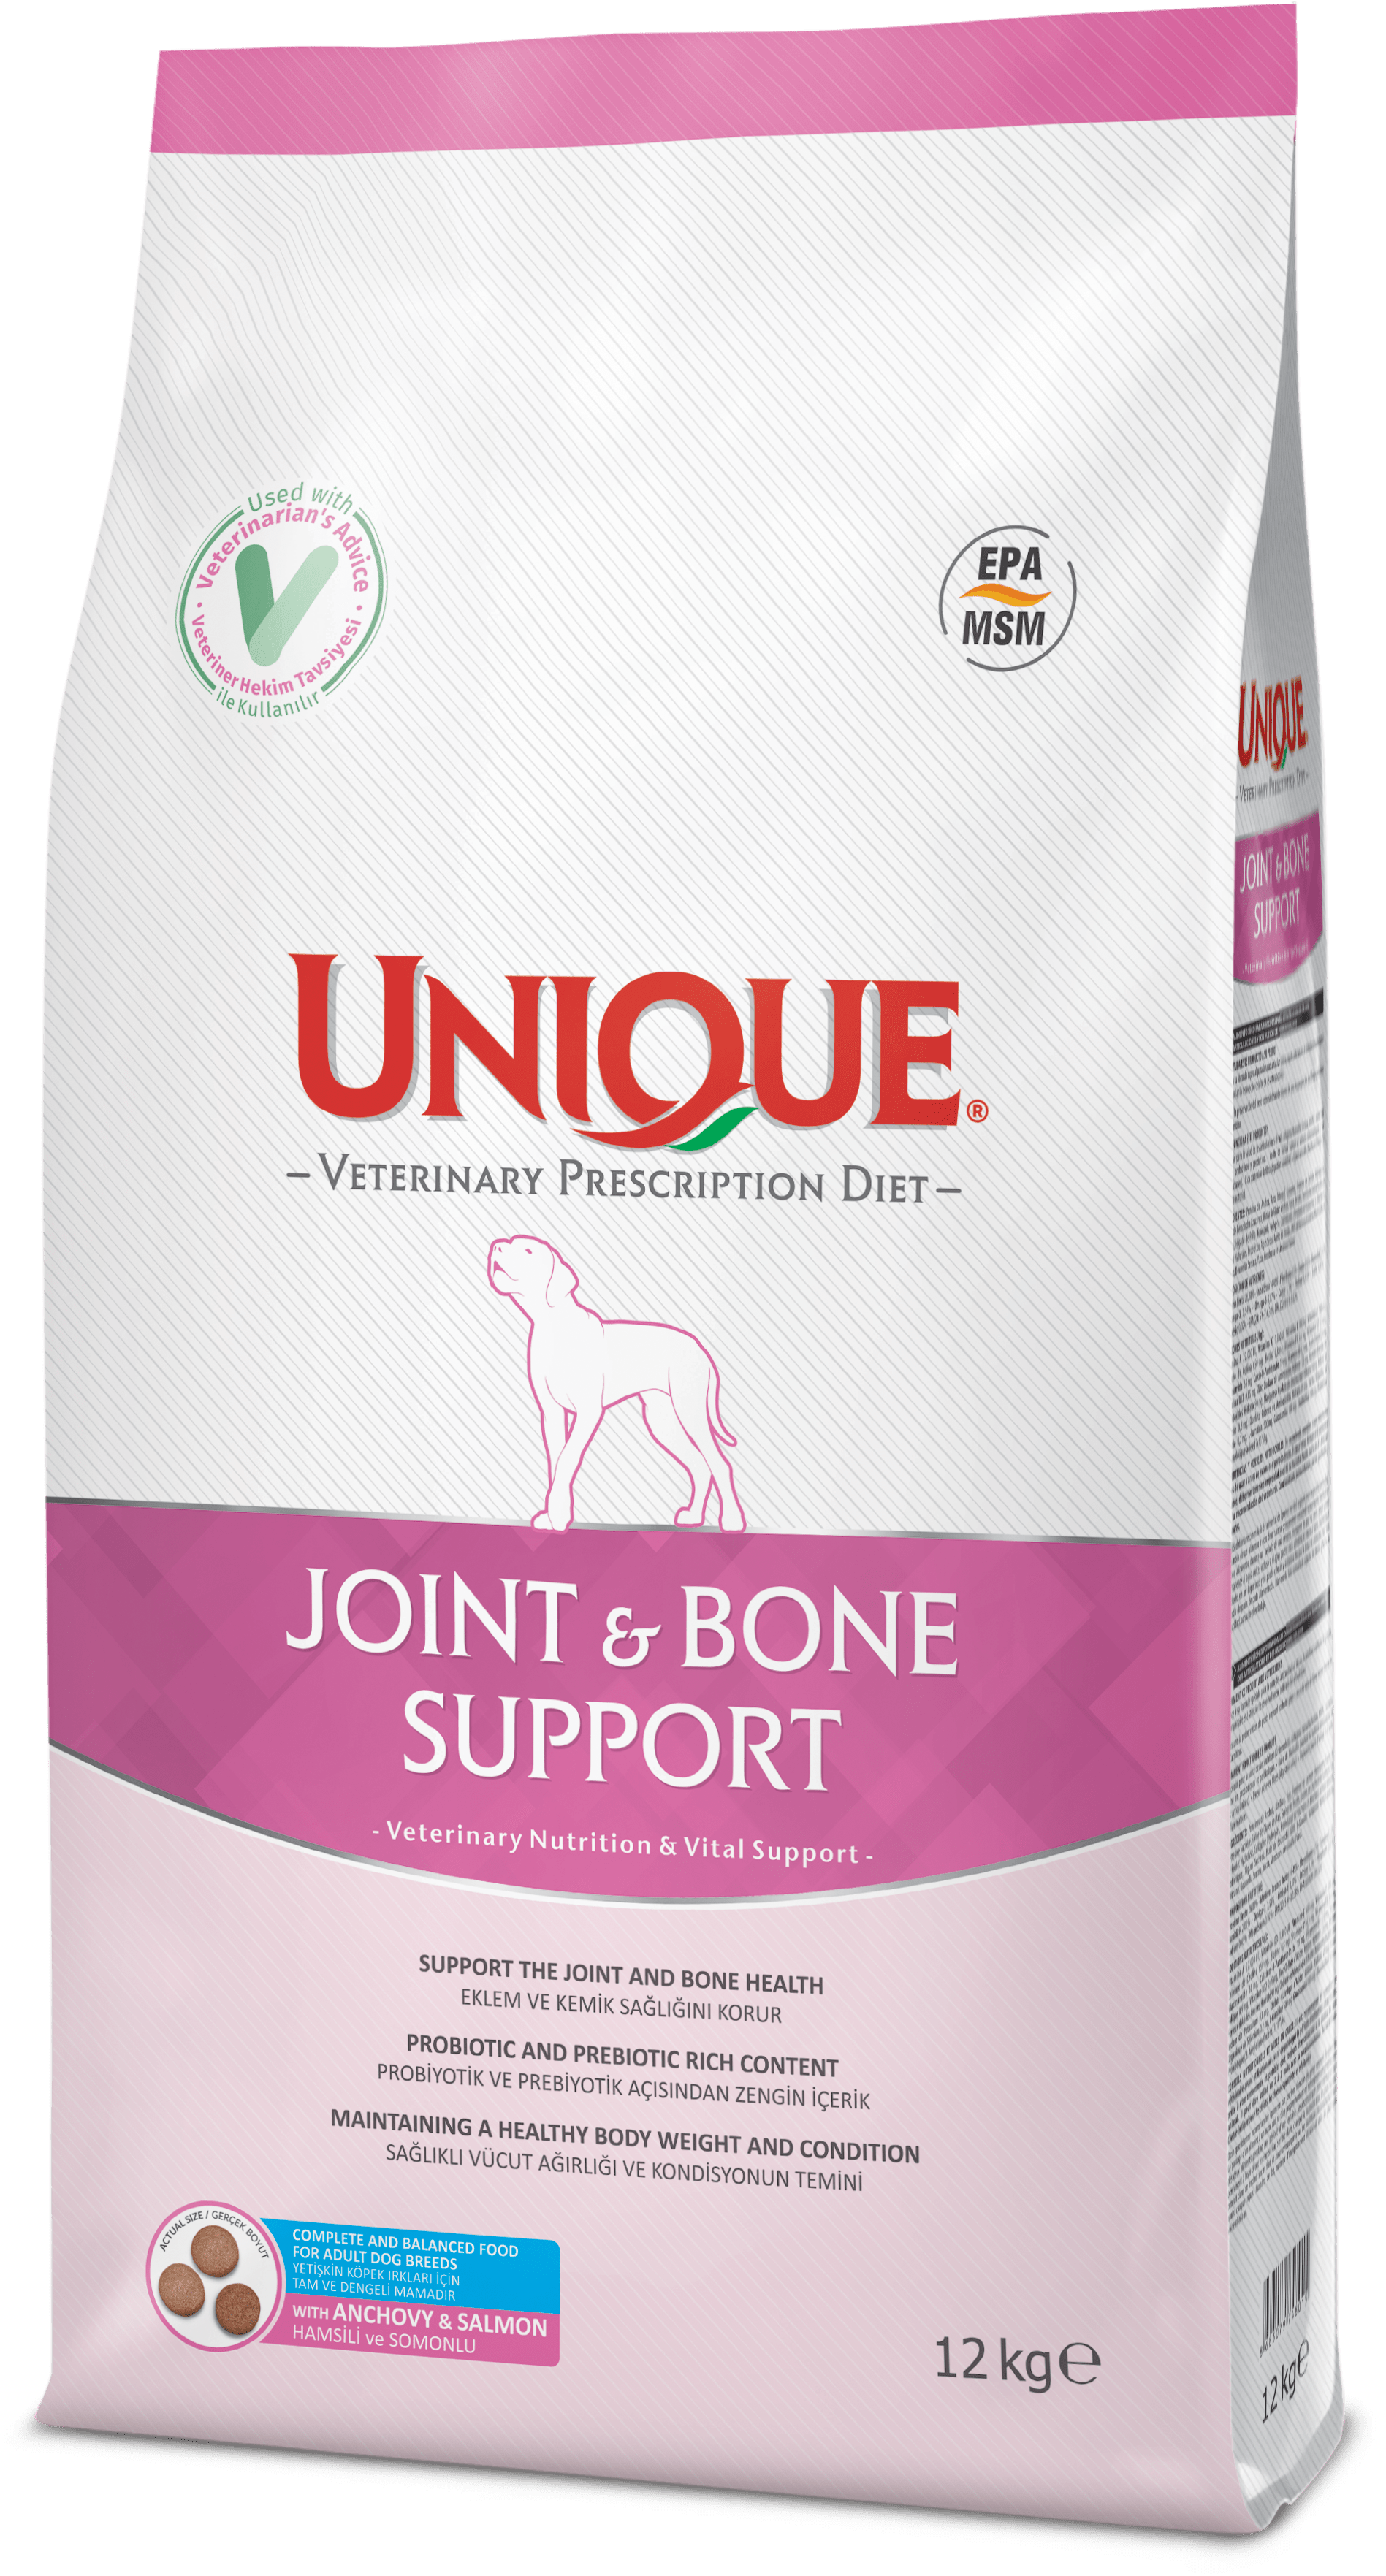 Beta Pet Health | Joint&Bone Support (Somonlu & Hamsili)